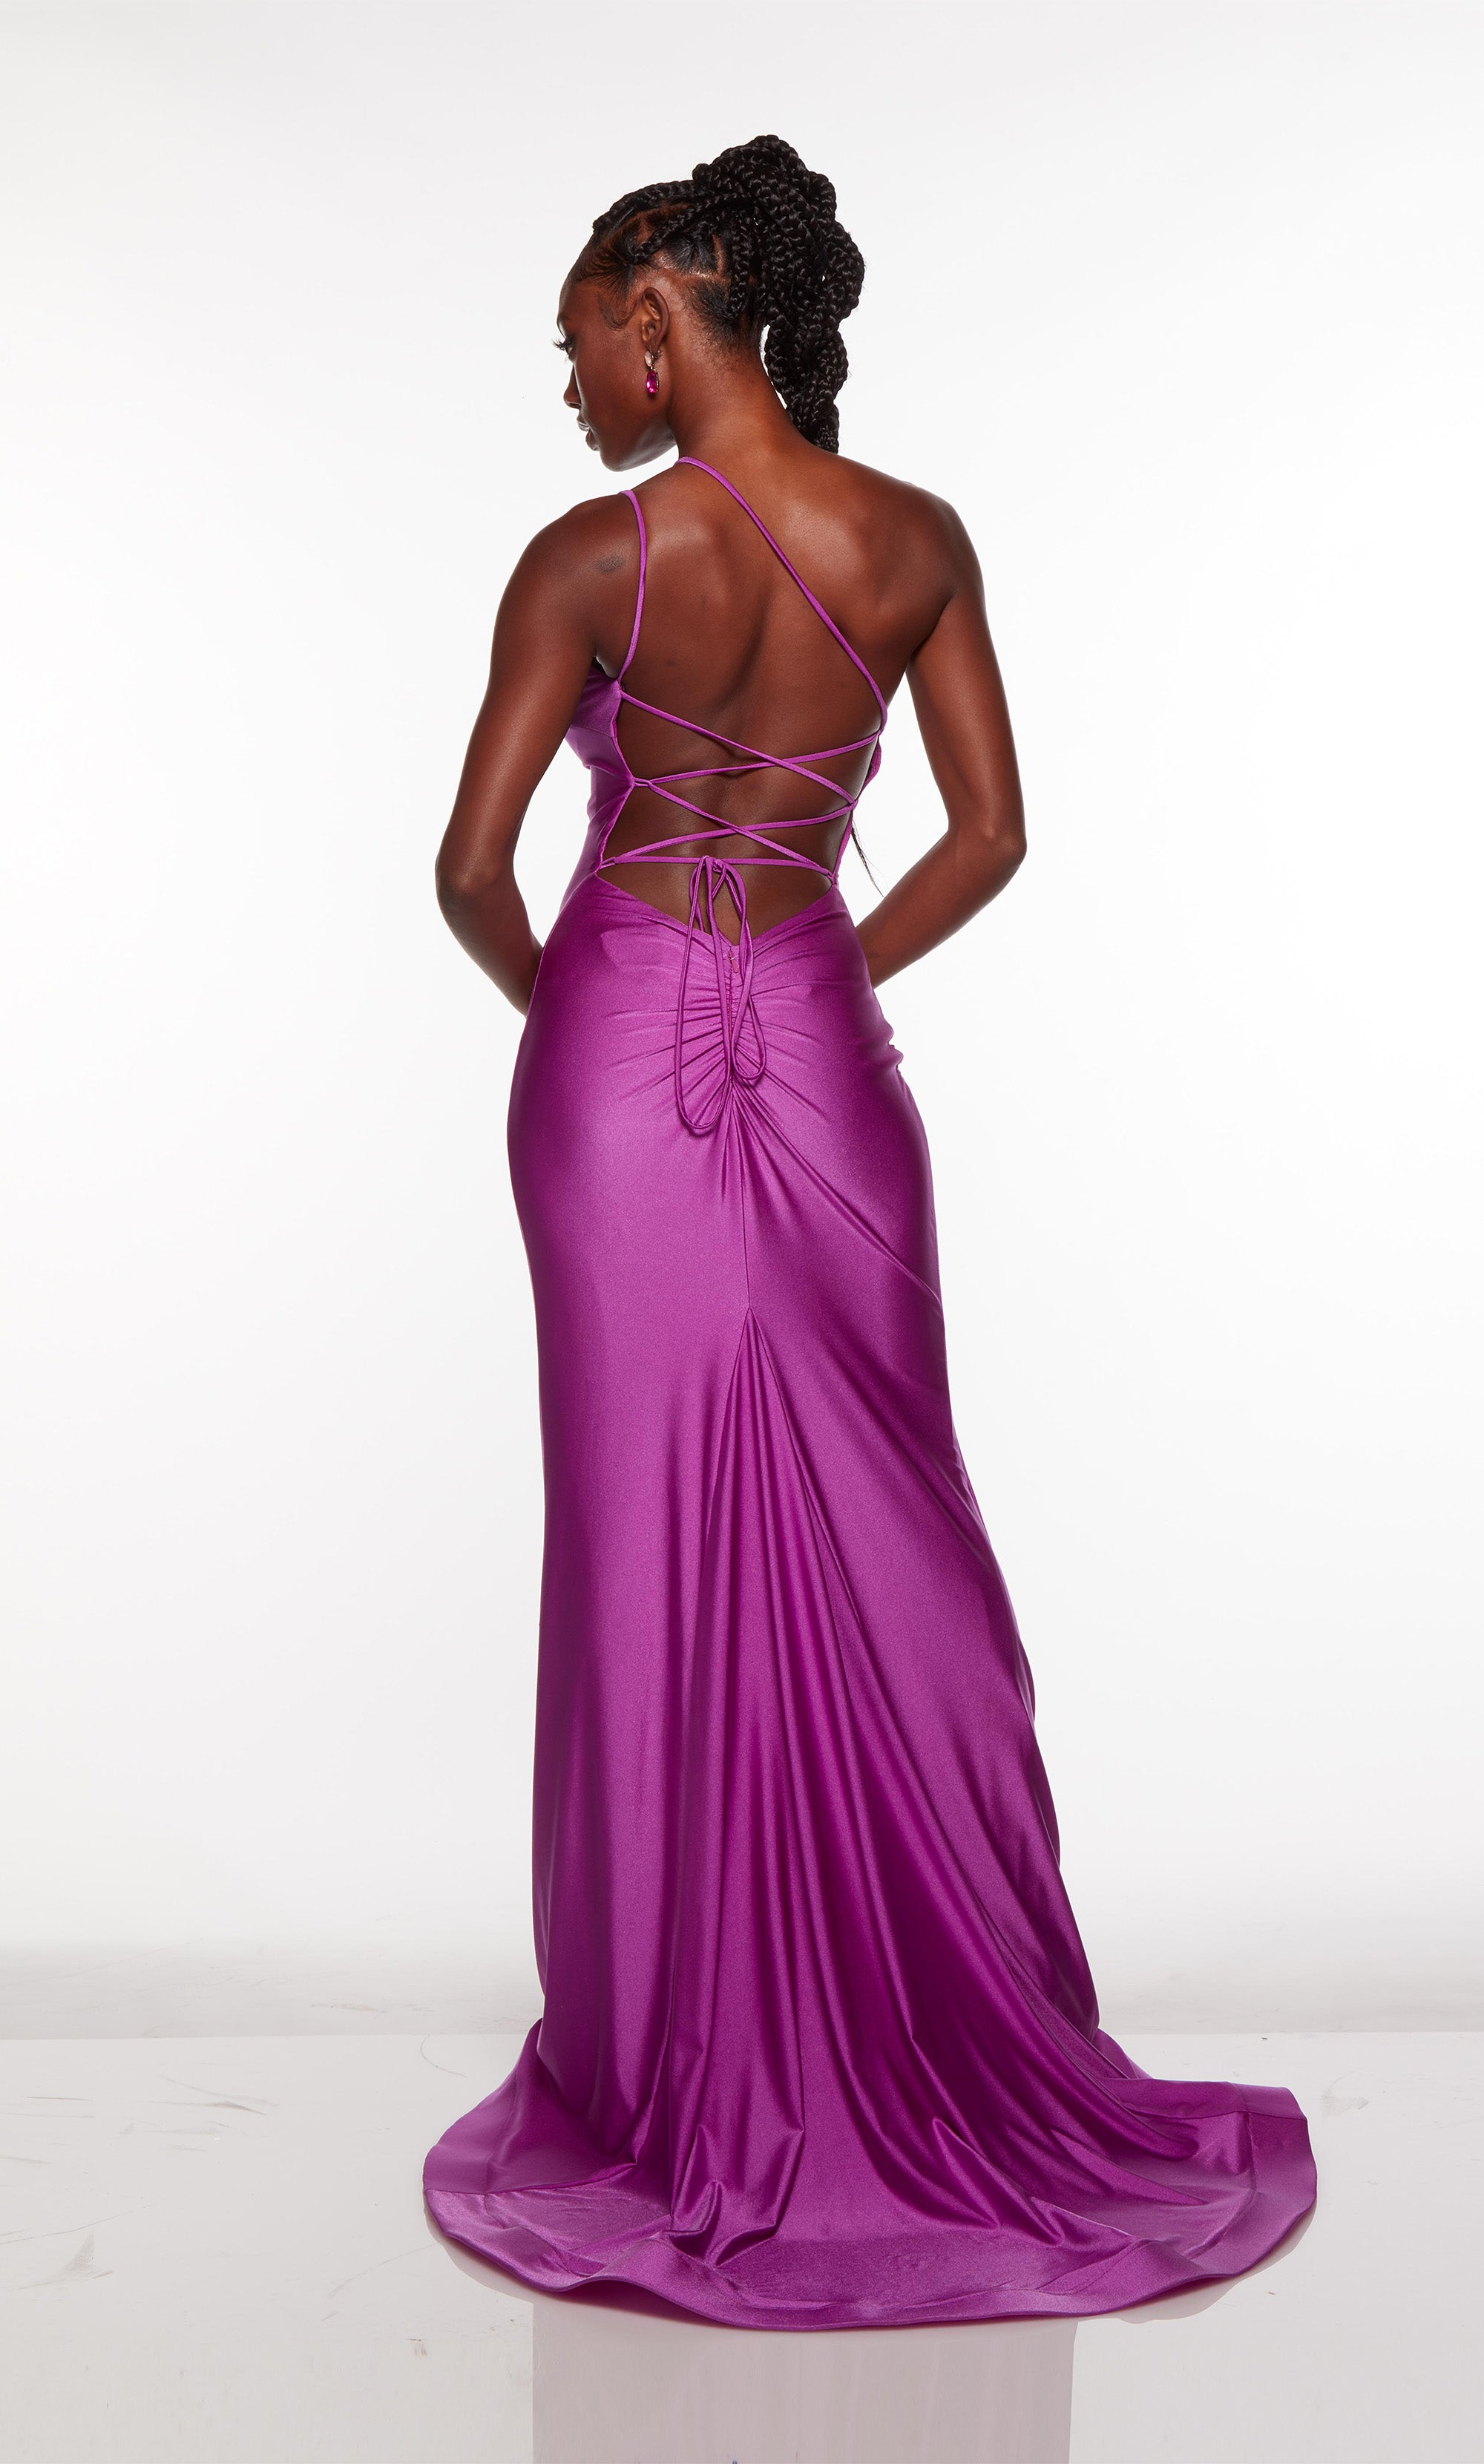 Asymmetrical Shoulder Straps Black Long Prom Dress - VQ